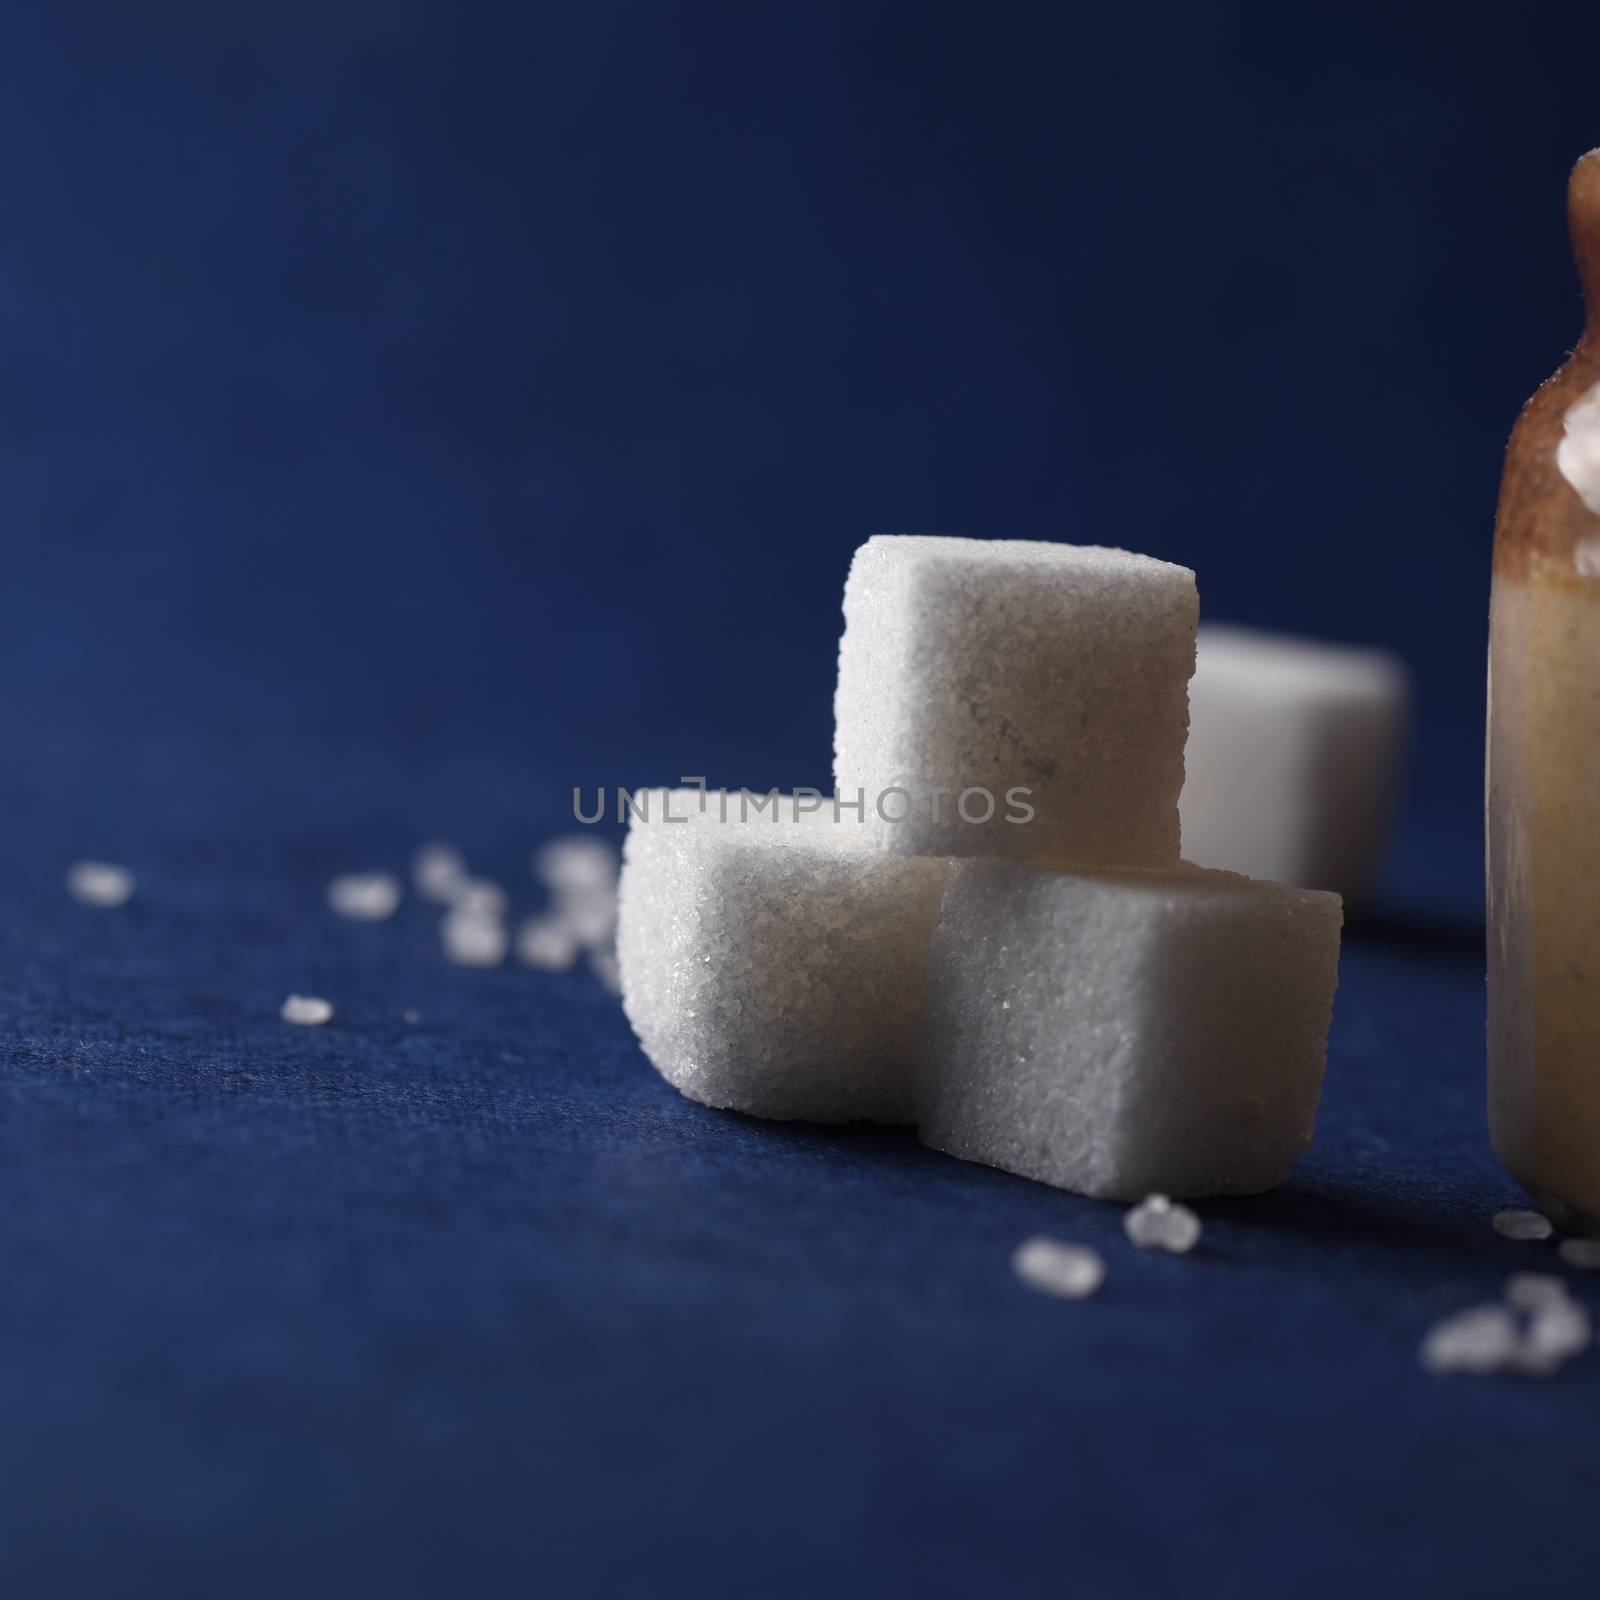 Sugar. white granulated sugar and refined sugar on a blue background